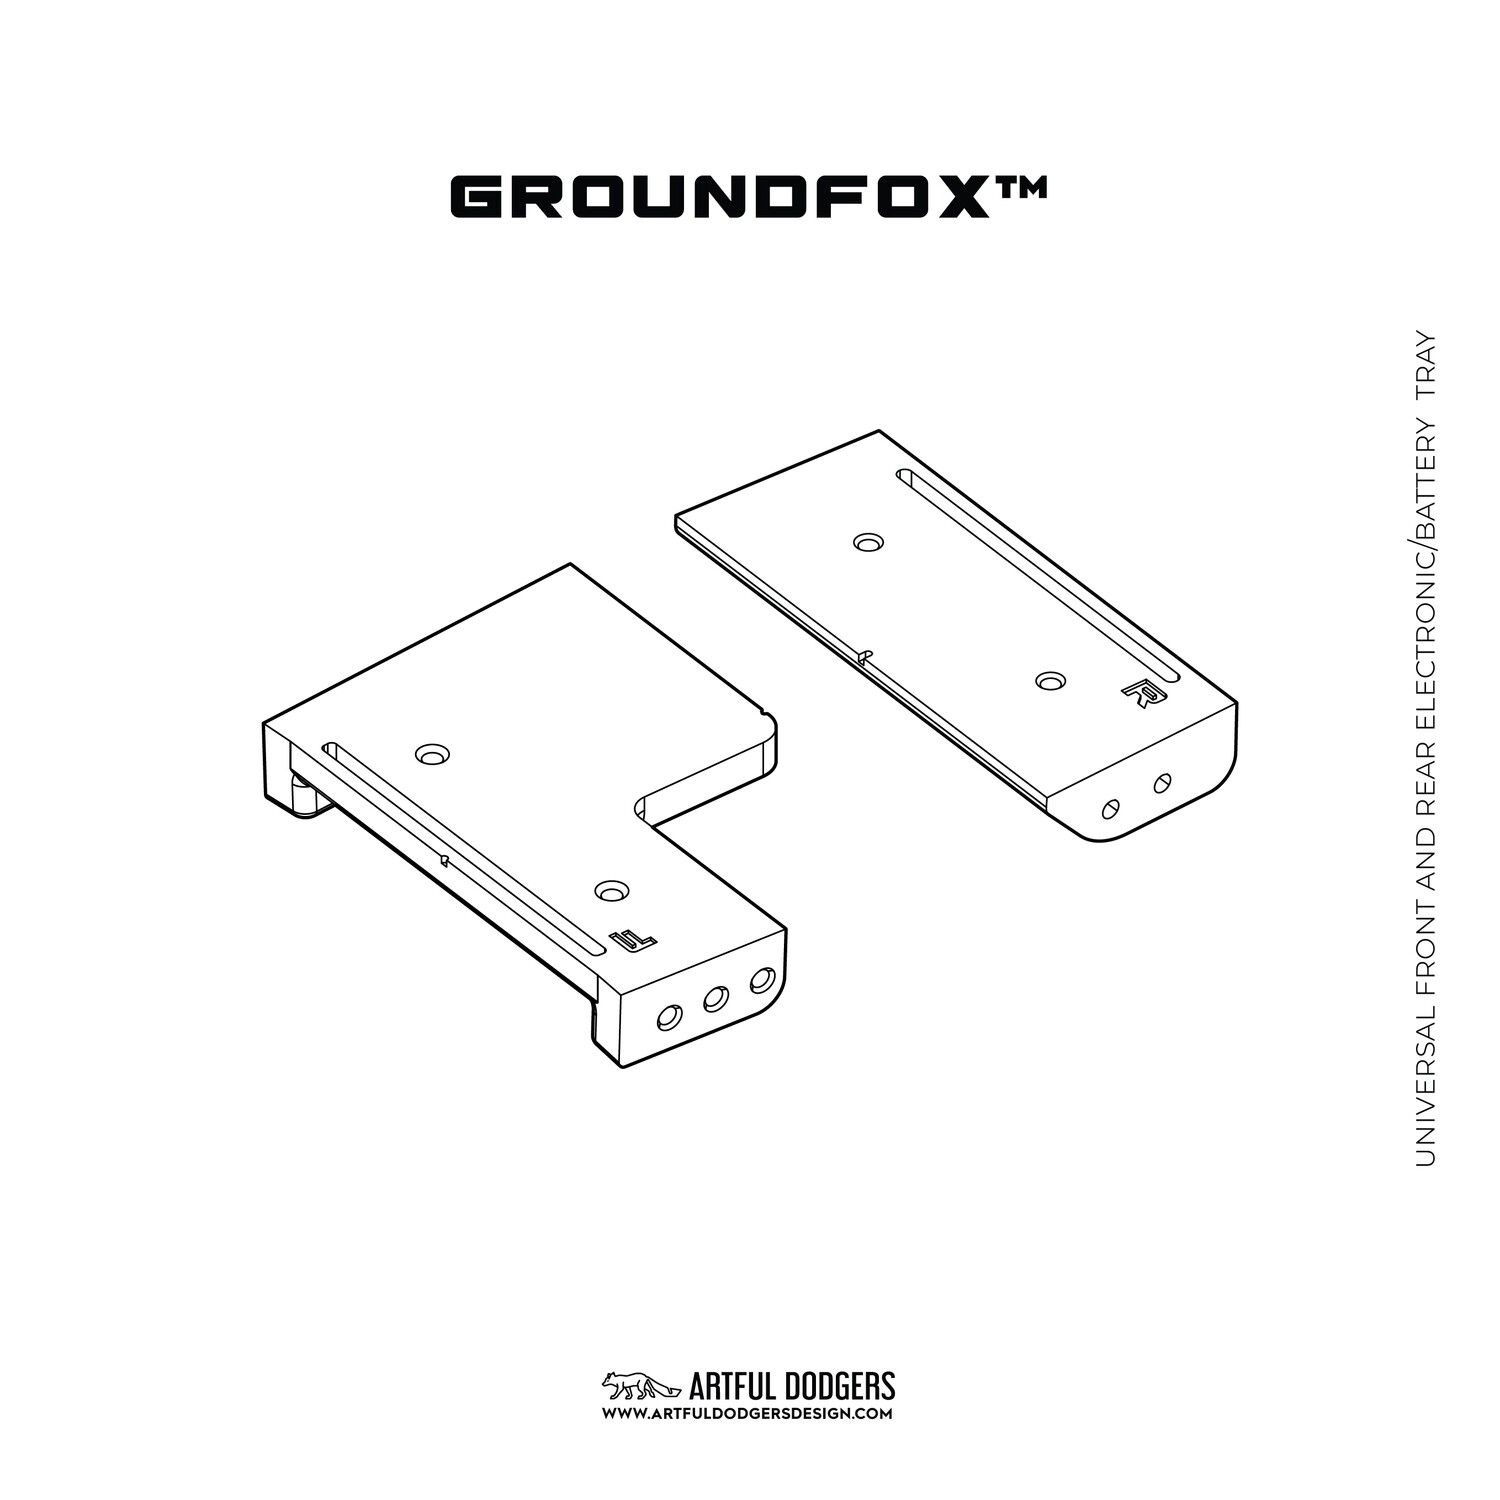 GroundFox v1.1/v1.2 battery/electronic trays set